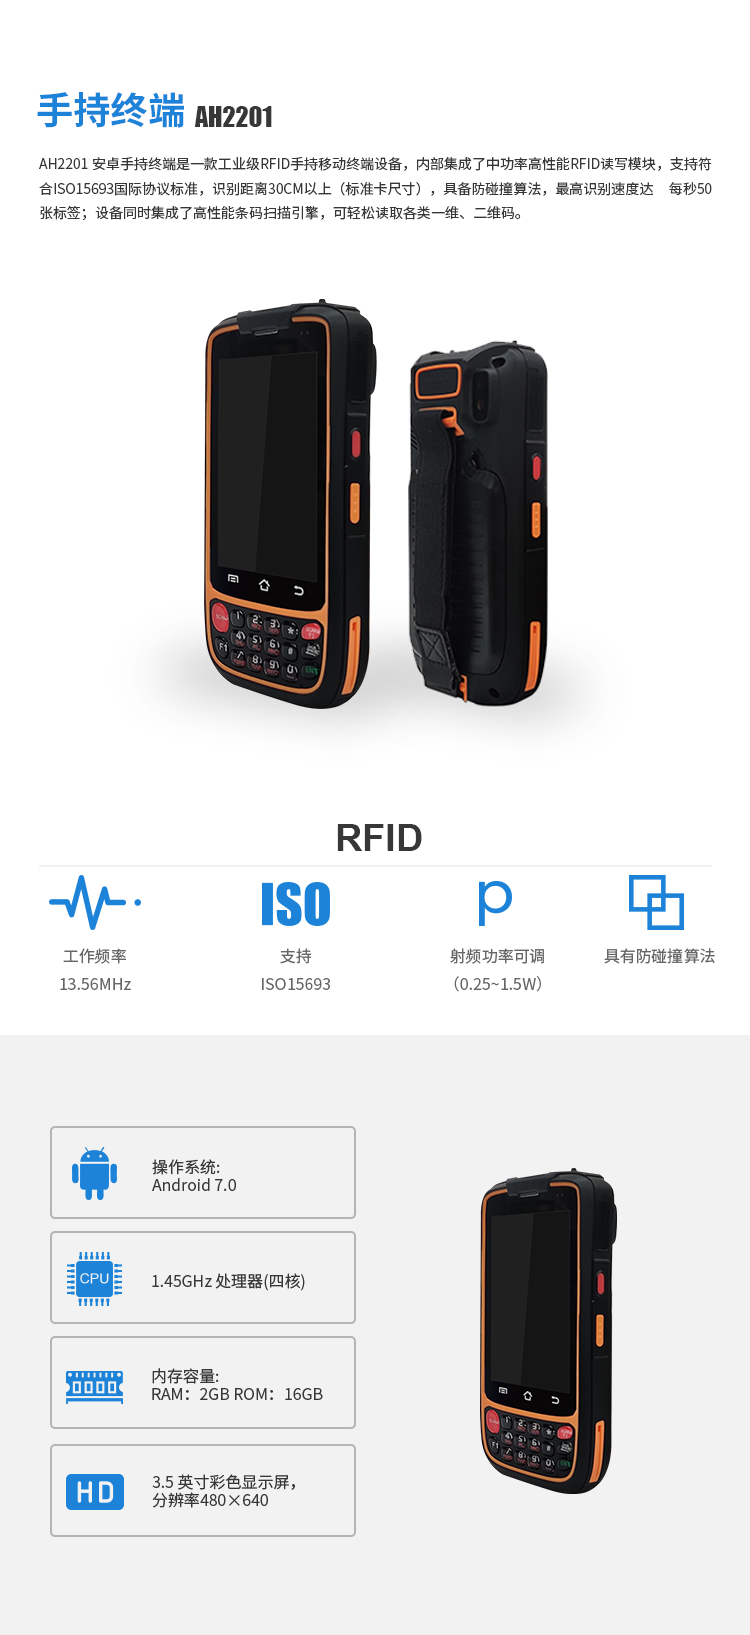 RFID读写器,RFID手持终端,工业RFID,工业PDA